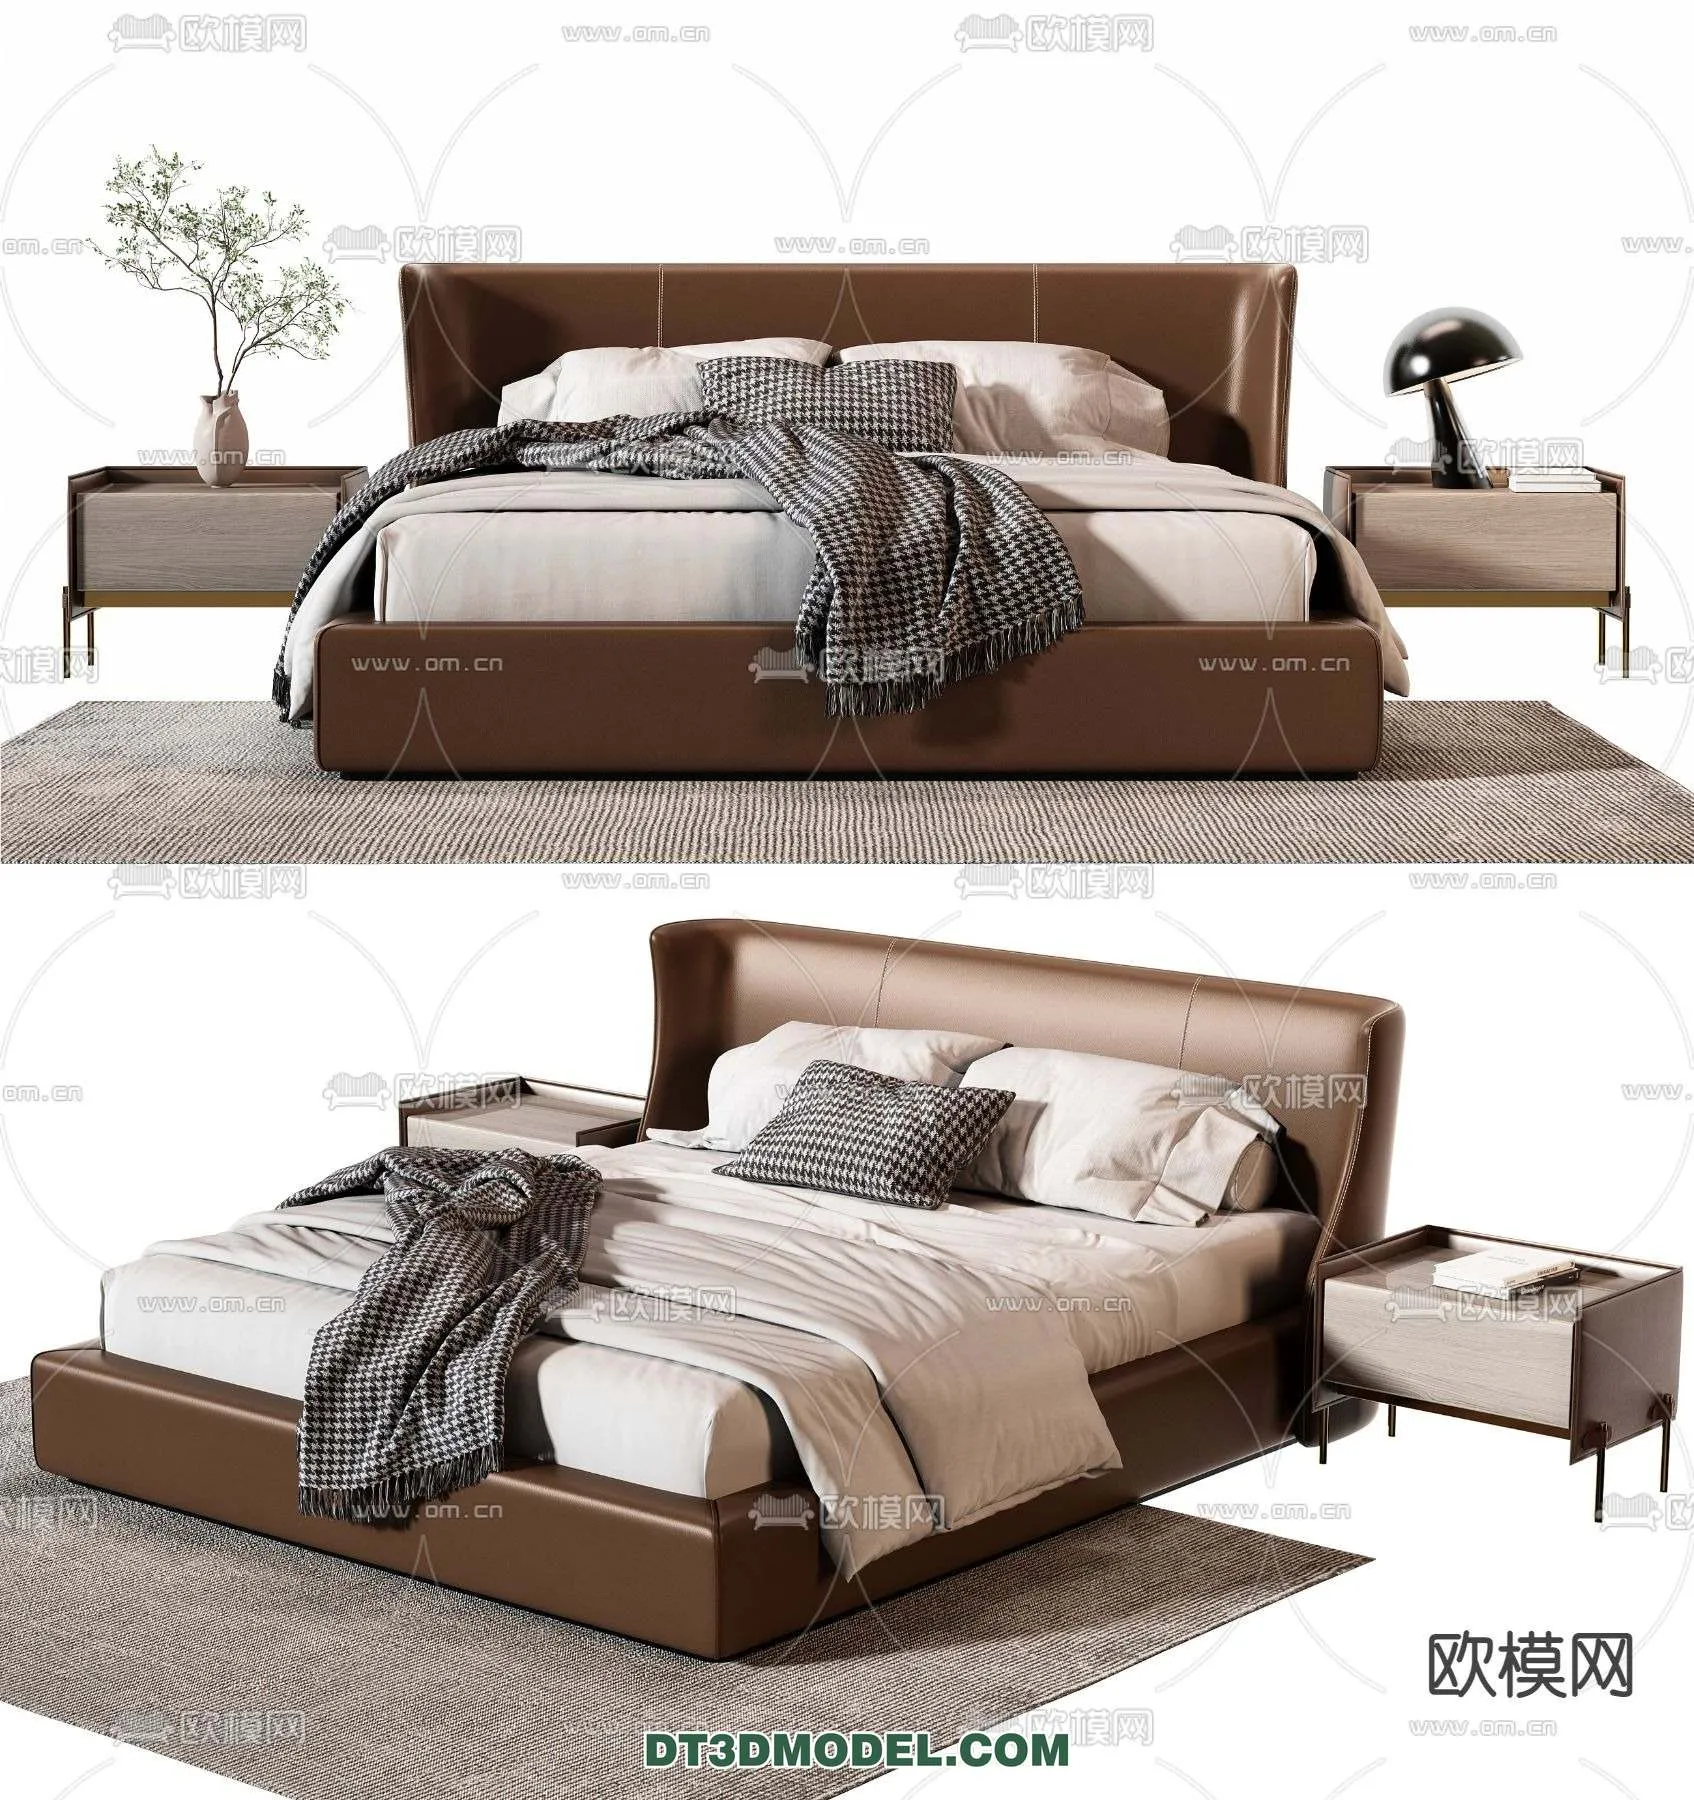 Double Bed 3D Models – 0046